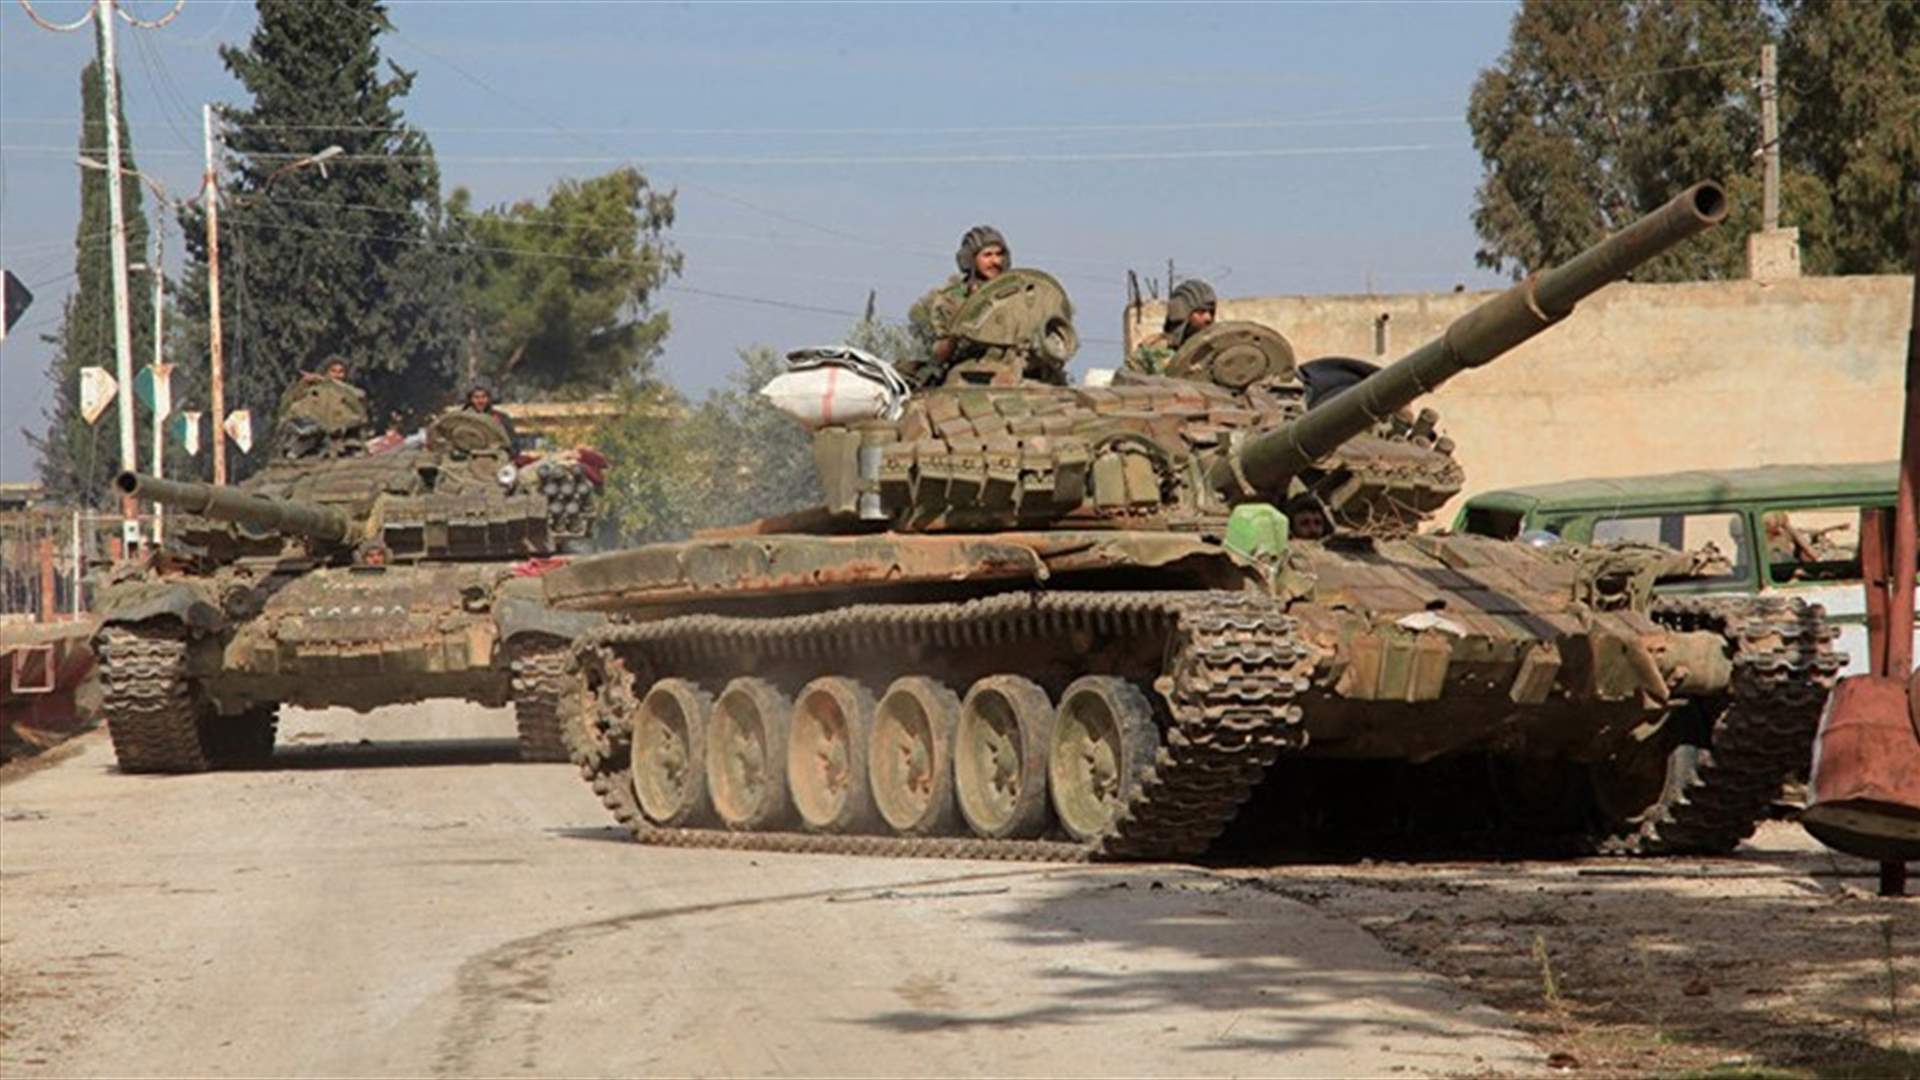 Syrian army advances against Islamic State near Aleppo - monitor